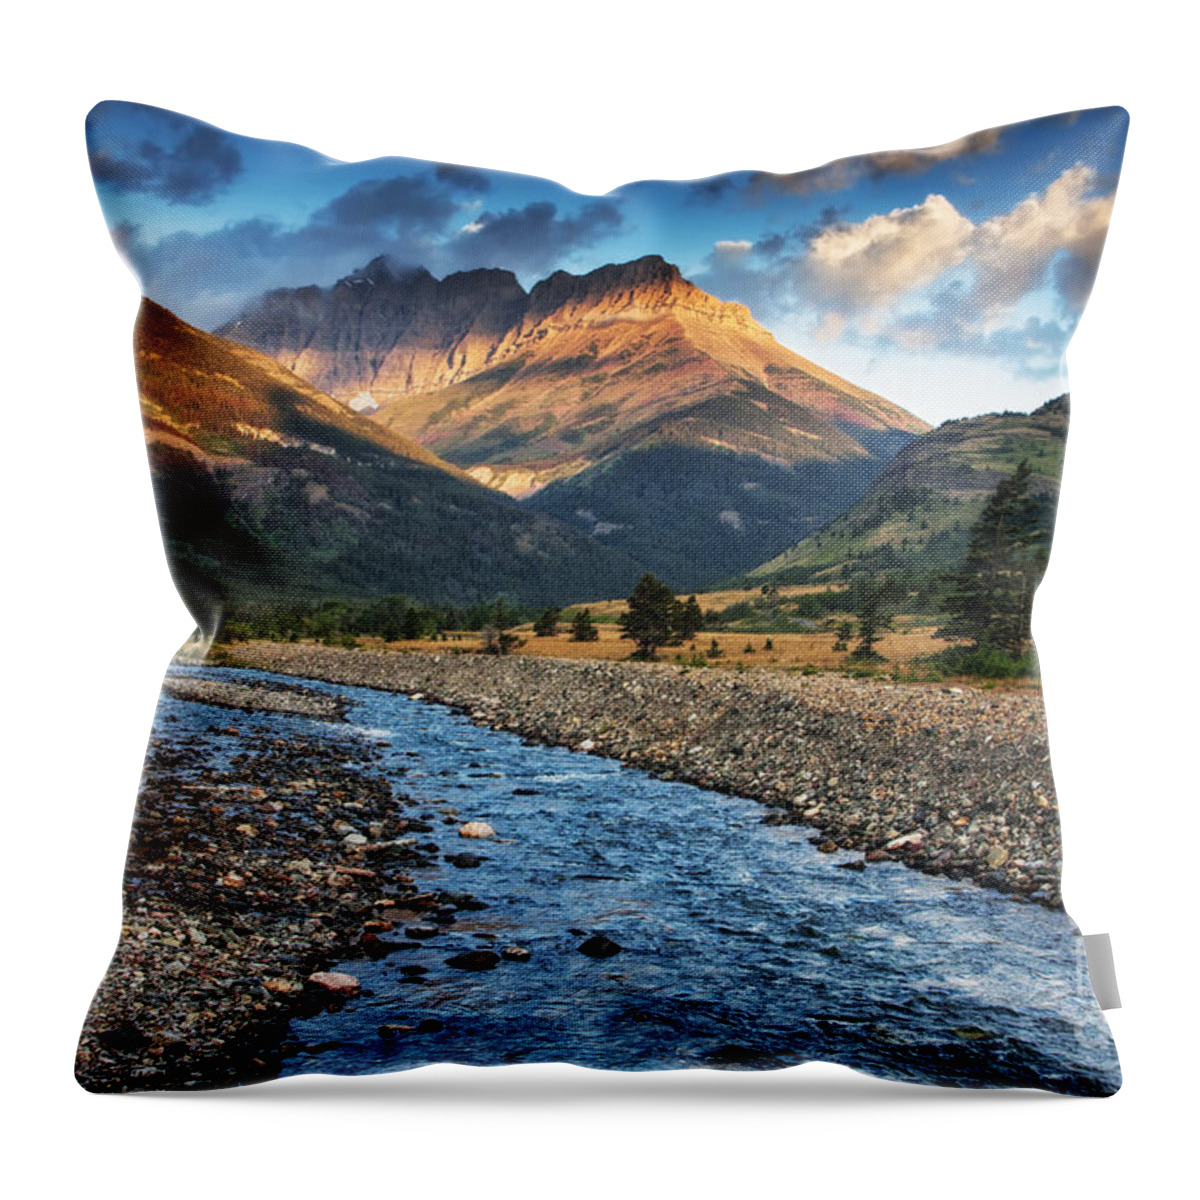 Alberta Throw Pillow featuring the photograph Blakiston Creek by Mark Kiver